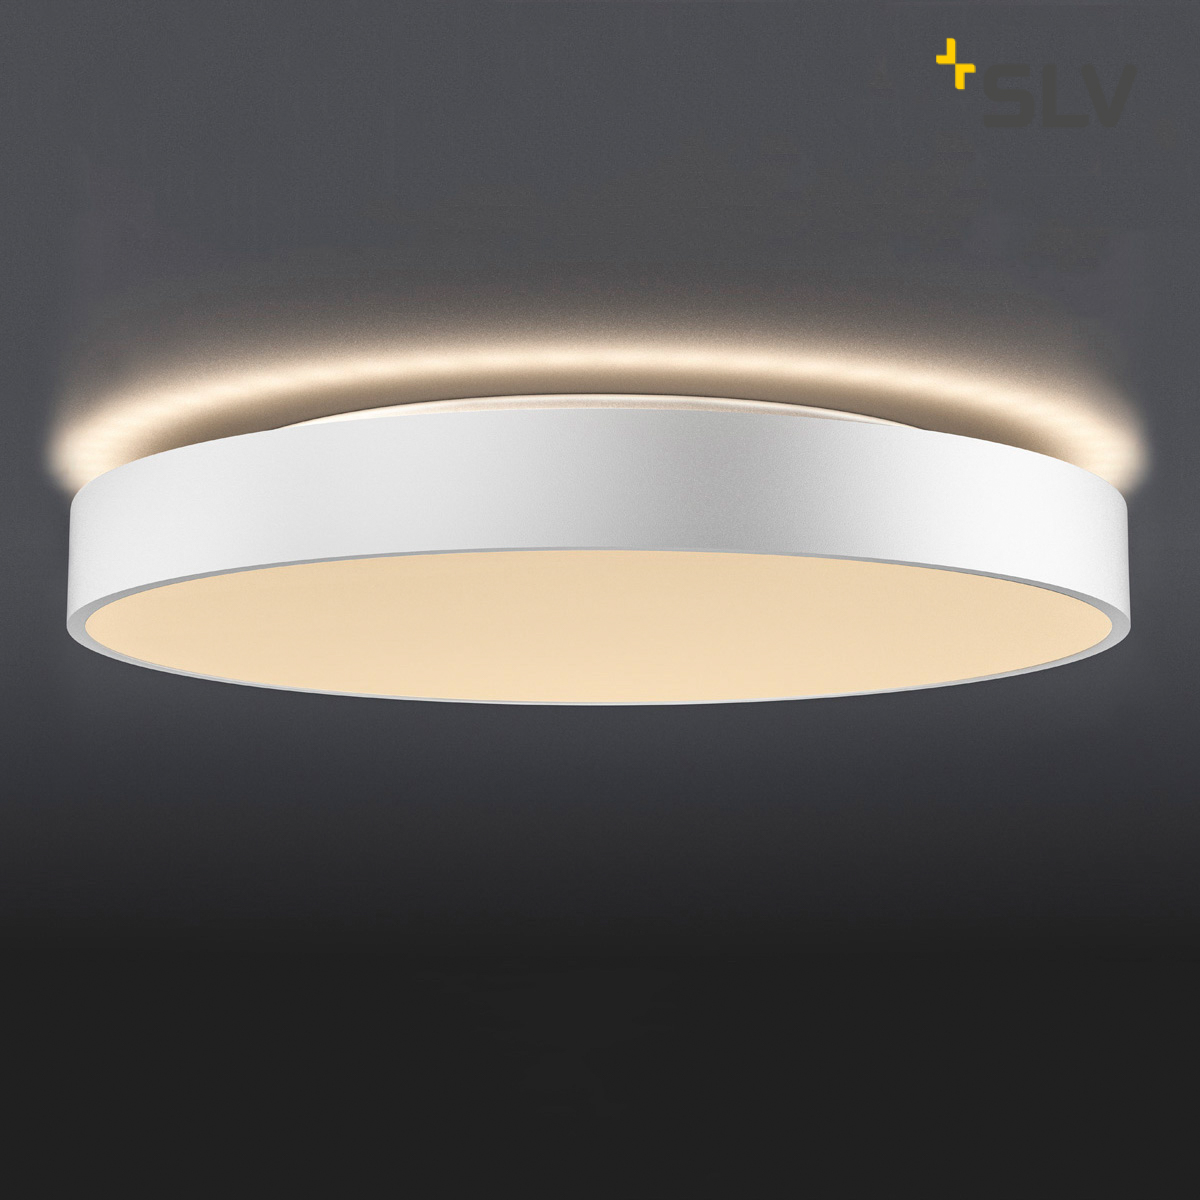 Plafoniera Lampa de Tavan/Perete LED SLV Medo 60 CW Corona alb